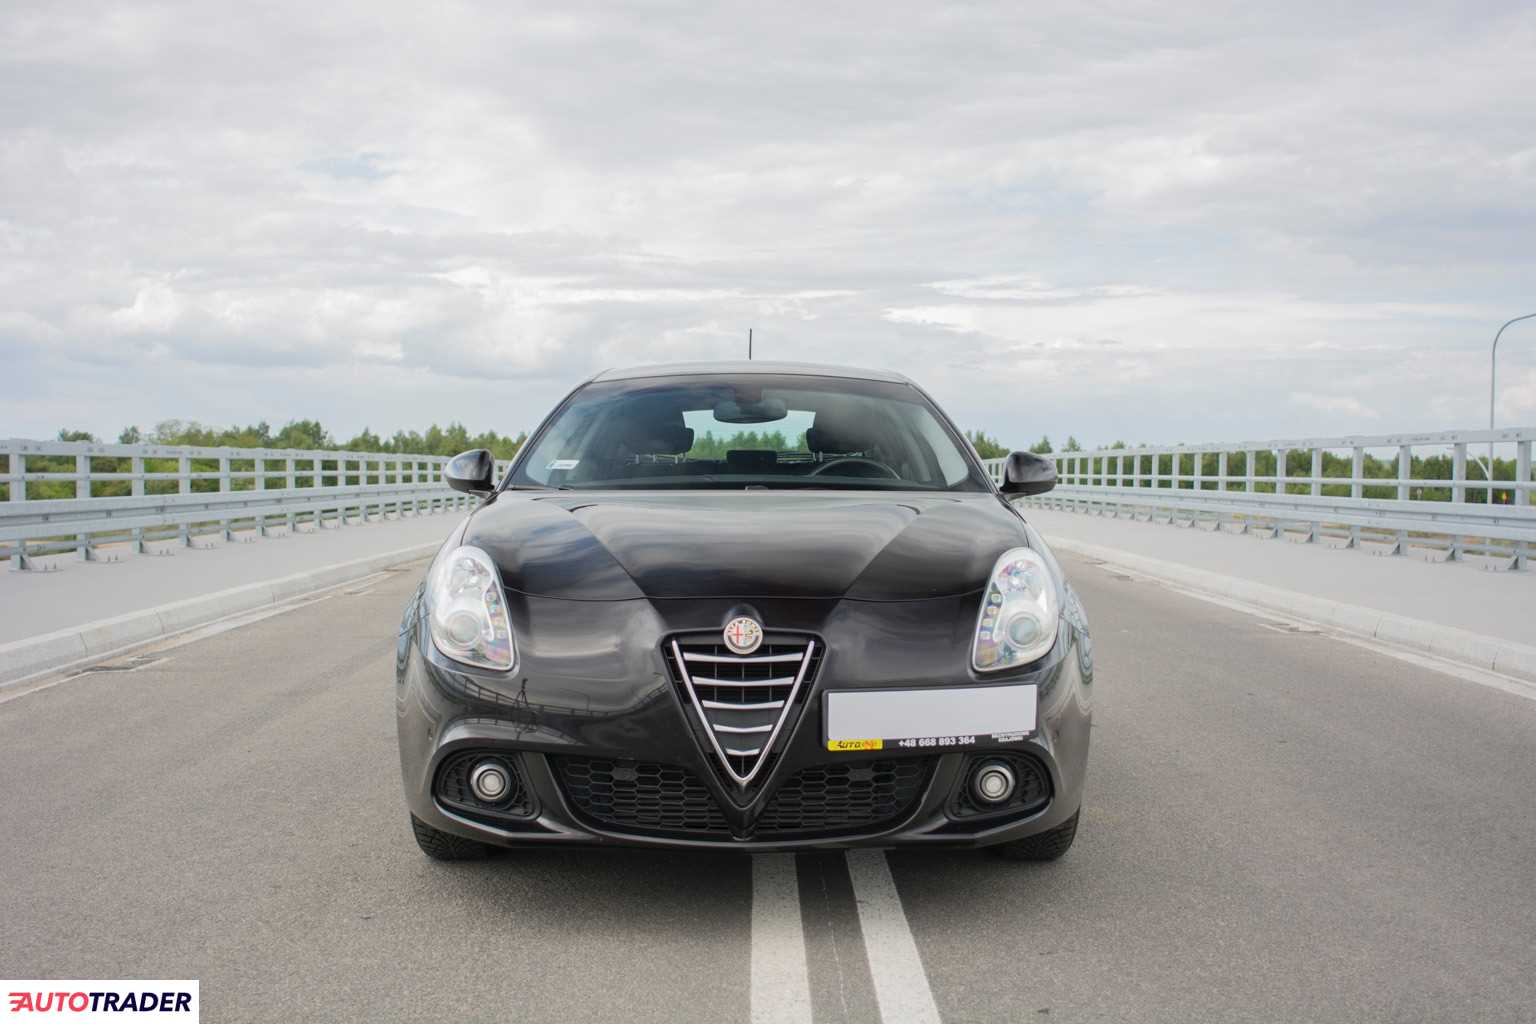 Alfa Romeo Giulietta 2015 1.4 170 KM